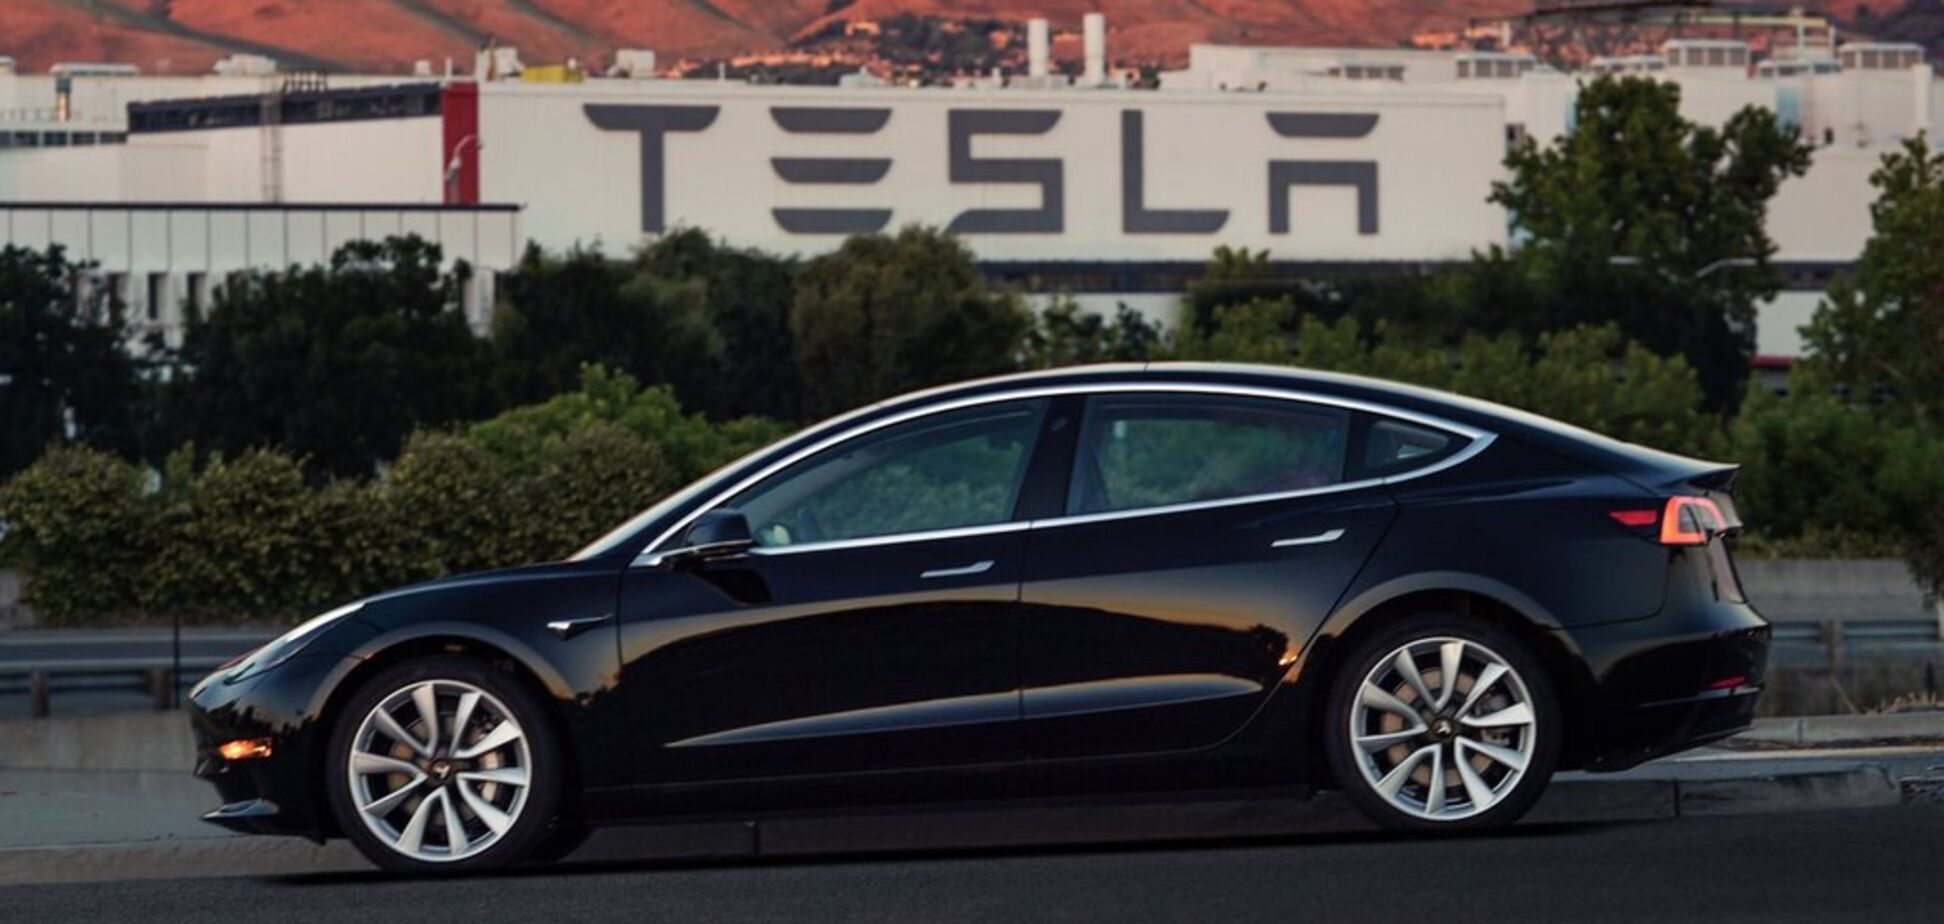 Tesla поставила рекорд по продажам авто и обогатилась